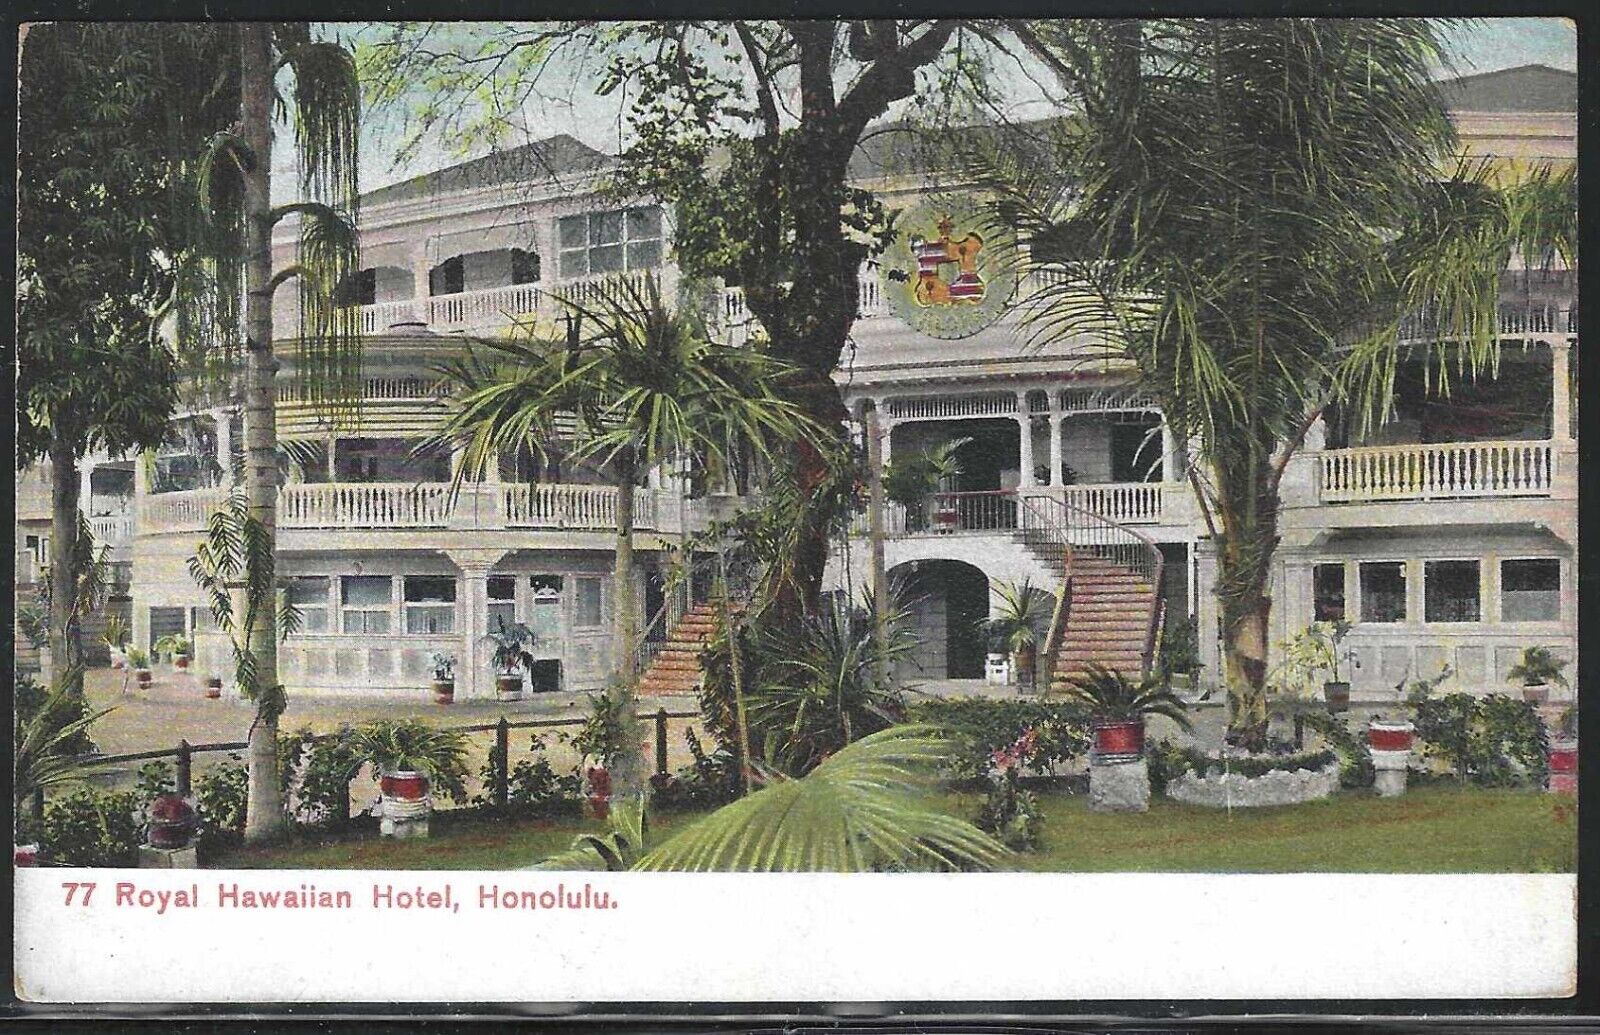 Royal Hawaiian Hotel, Honolulu, Hawaii, Early Private Mailing Card, Unused